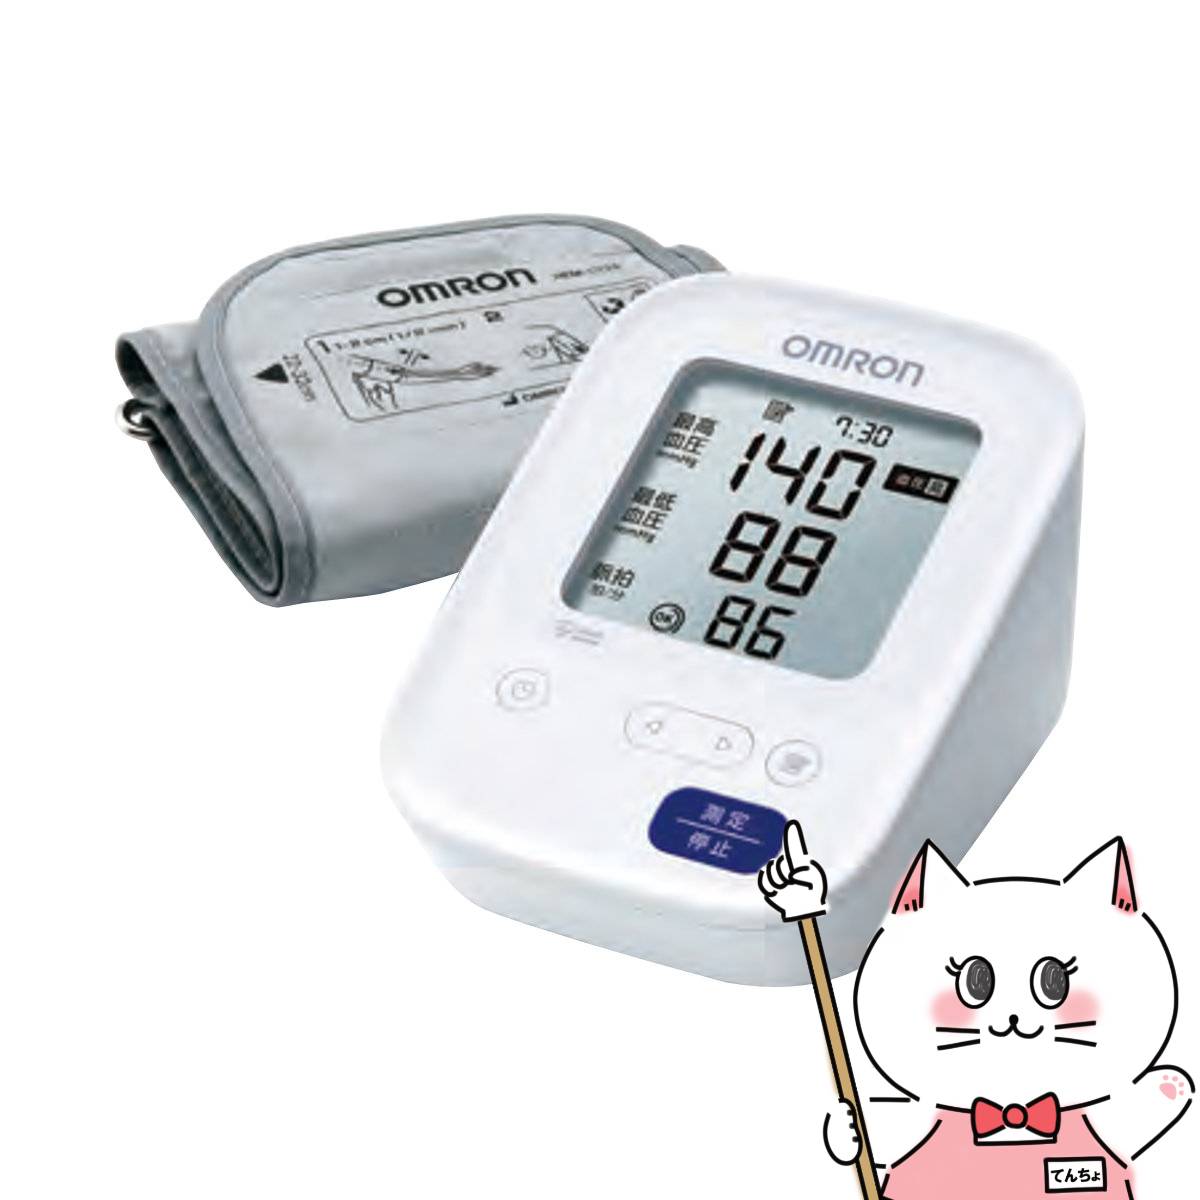 【クーポン配布中】オムロン 上腕式血圧計 HEM-7107【別途延長保証契約可能】【宅配便送料無料】 (6053244)